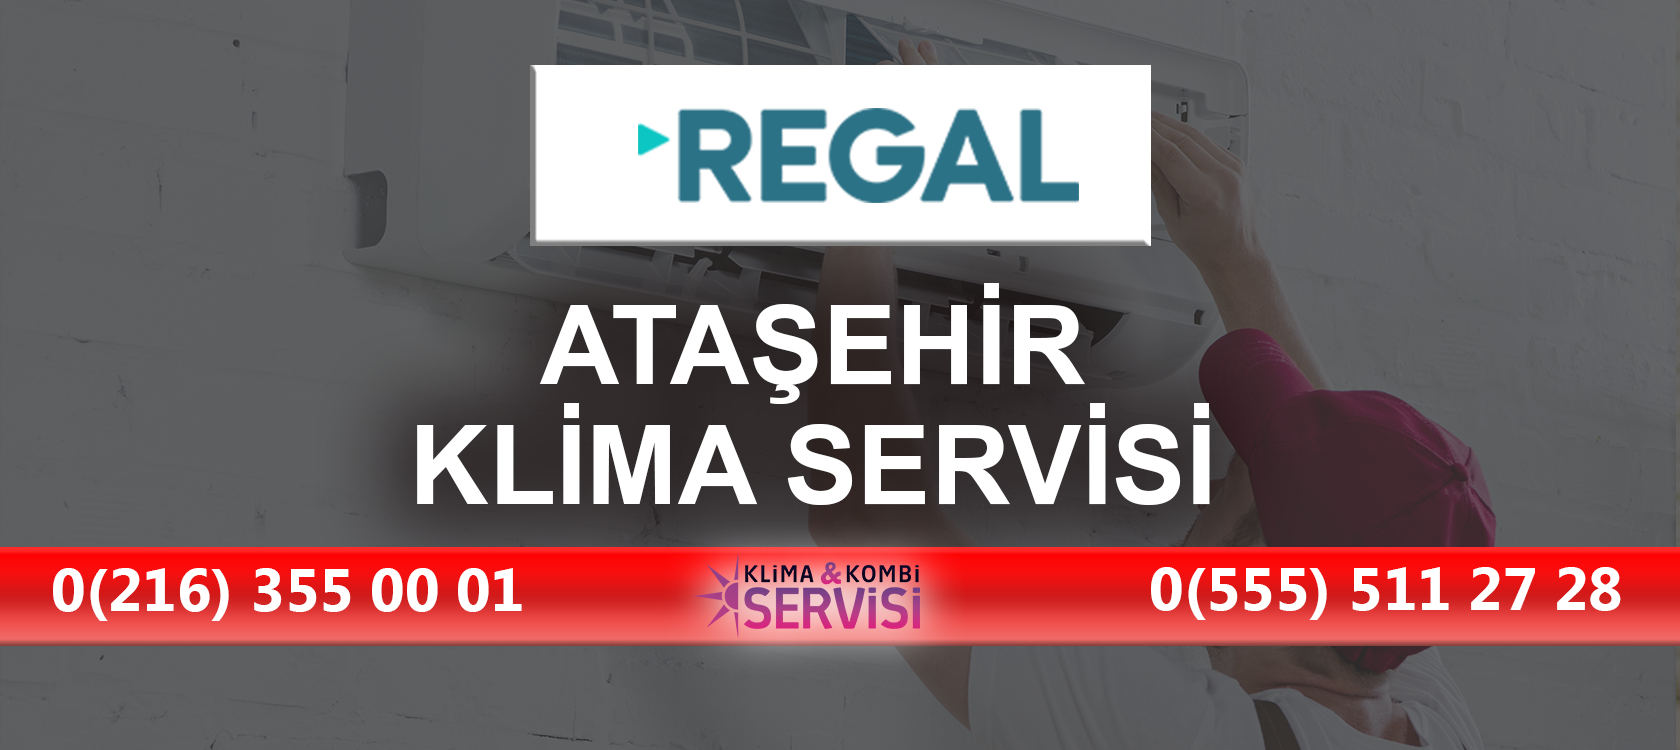 Ataşehir Regal Klima Servisi